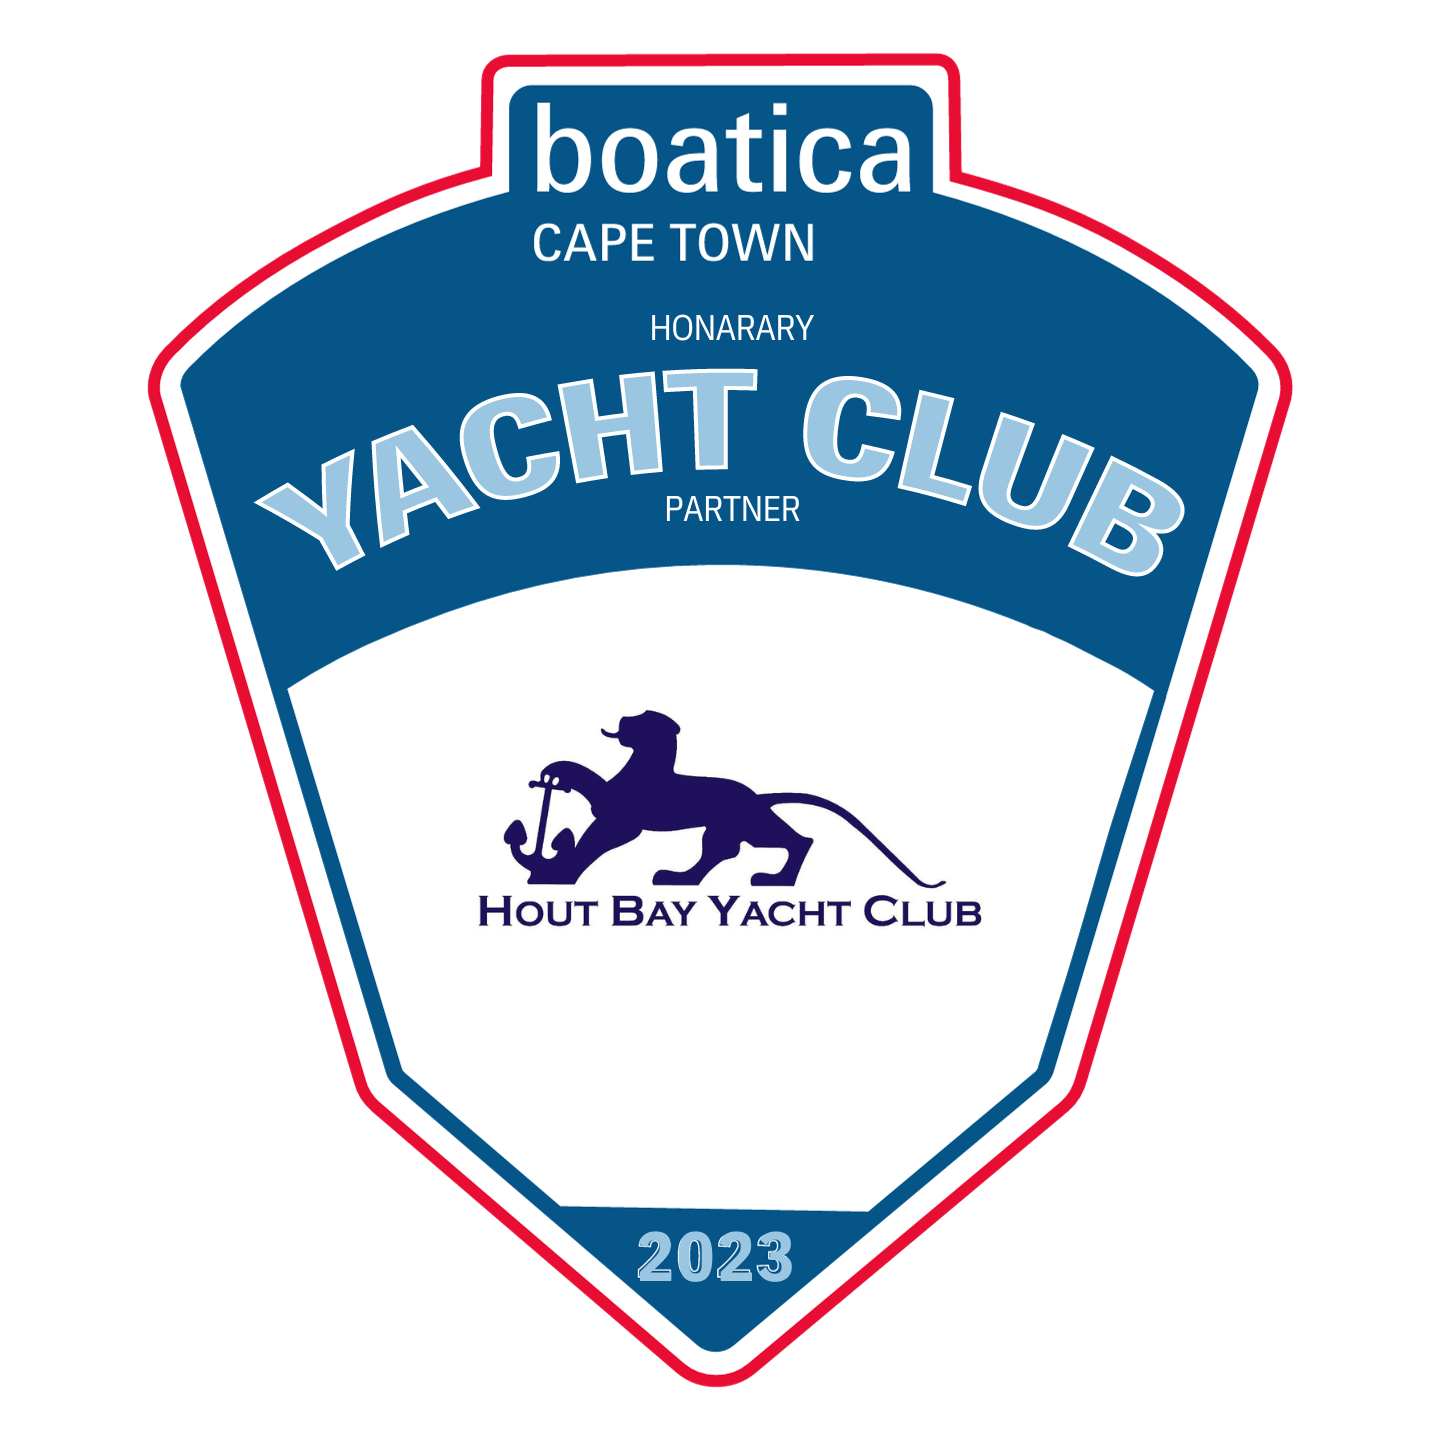 Hout bay boatica honorary yacht club partner logo.pdf - 1